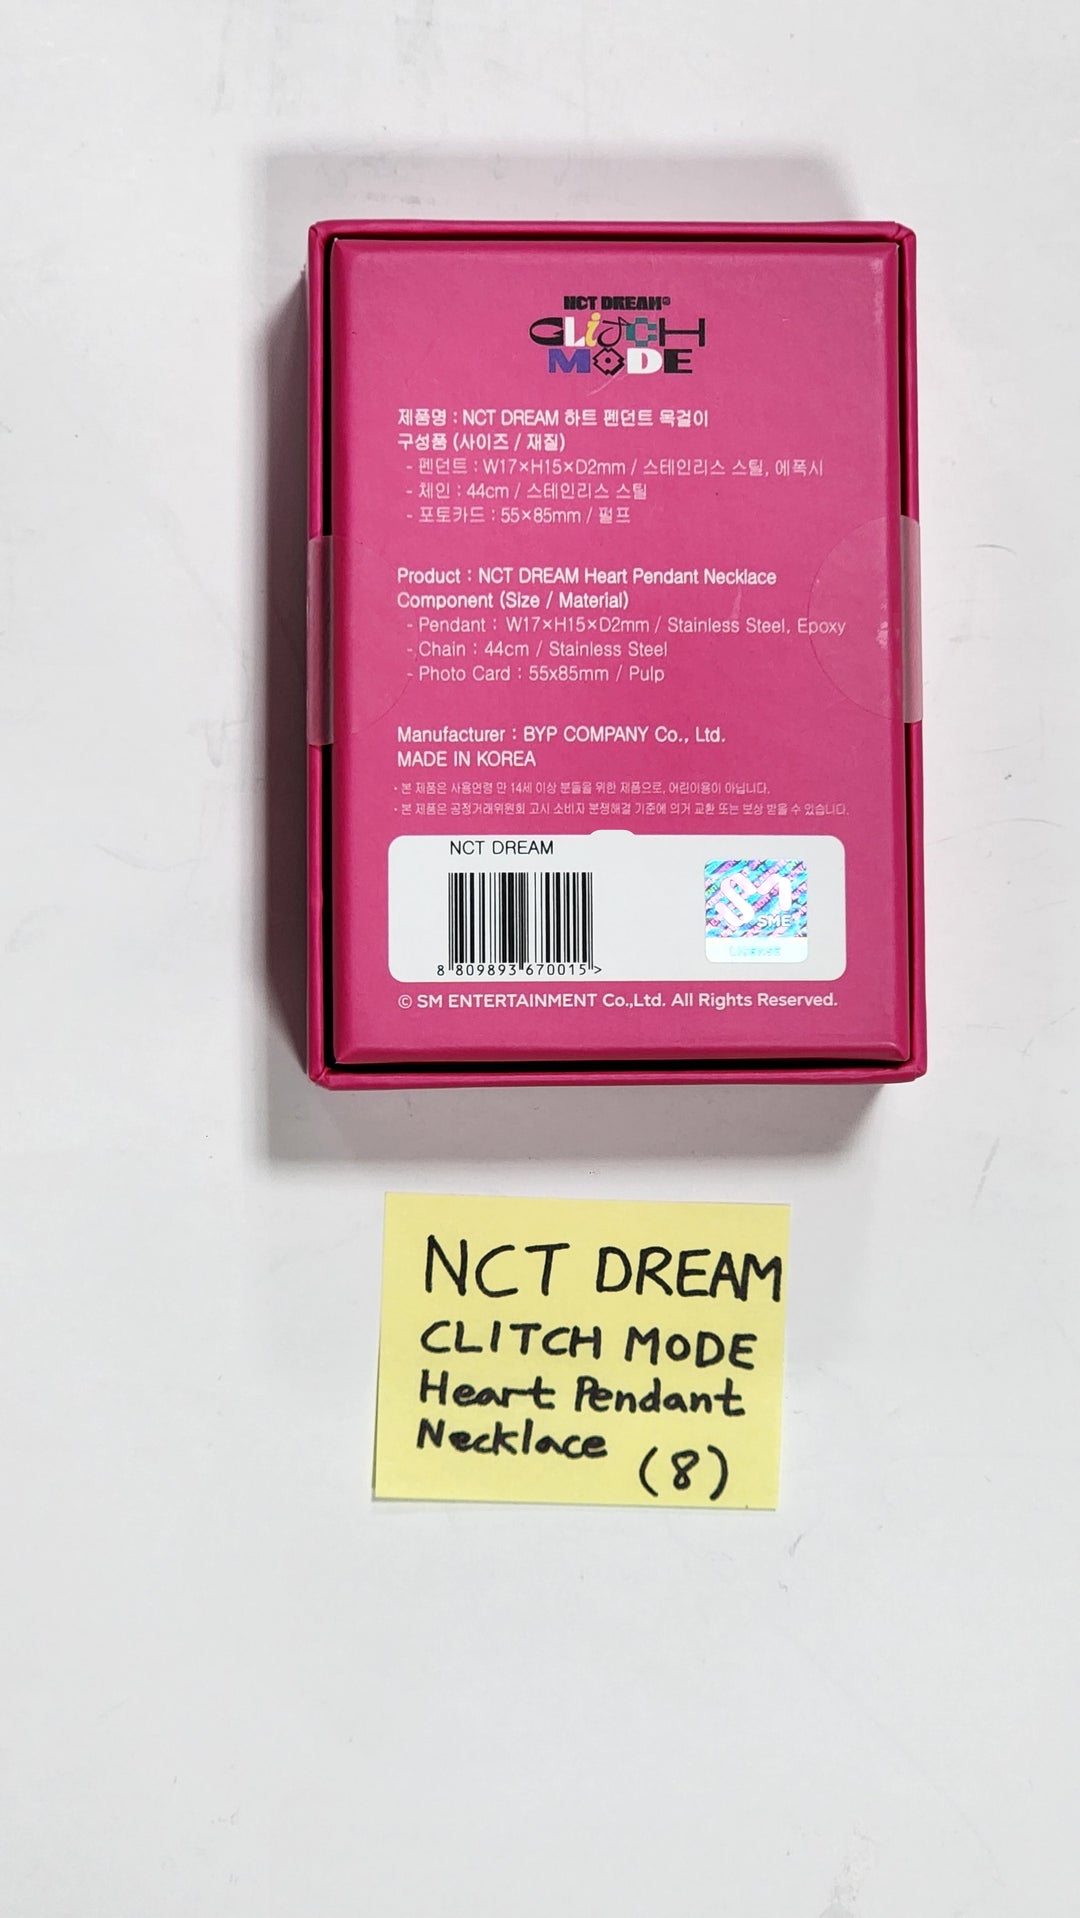 NCT Dream 'Glitch Mode' - ハート ペンダント ネックレス (新品 / 密封済み)